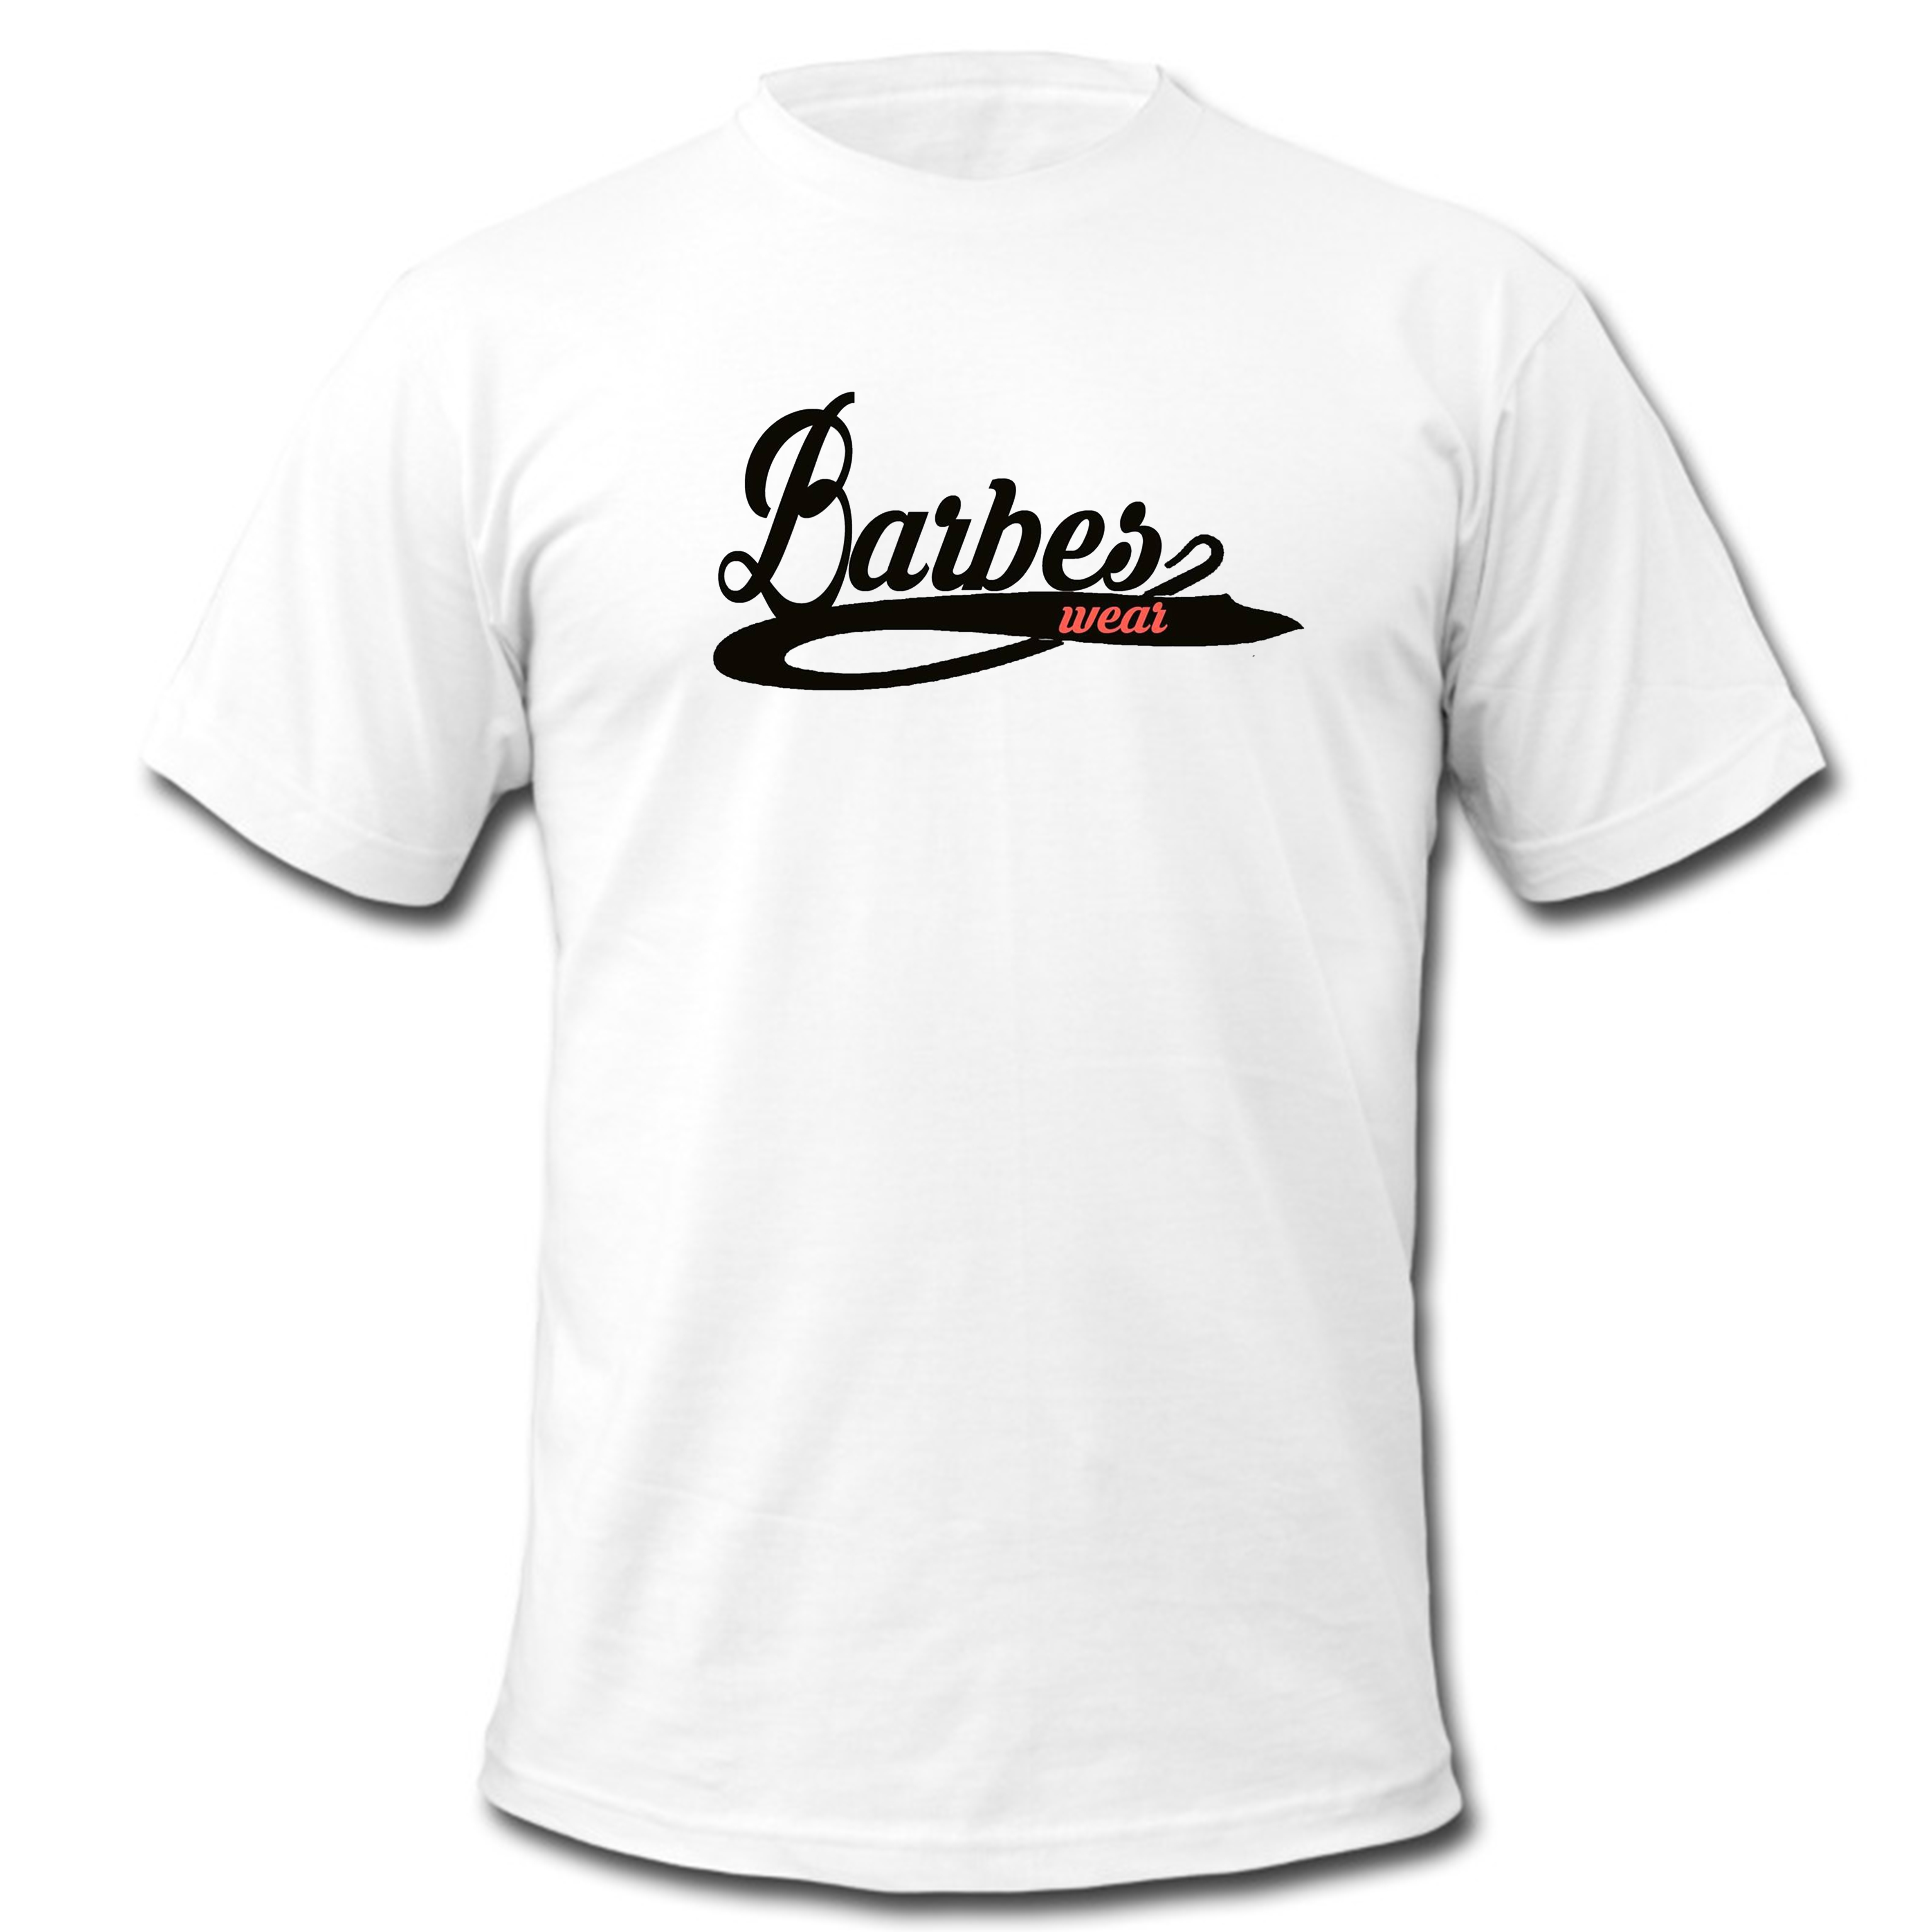 tee shirt "Barbès wear " noir logo blanc de barbes wear sur Scredboutique.com